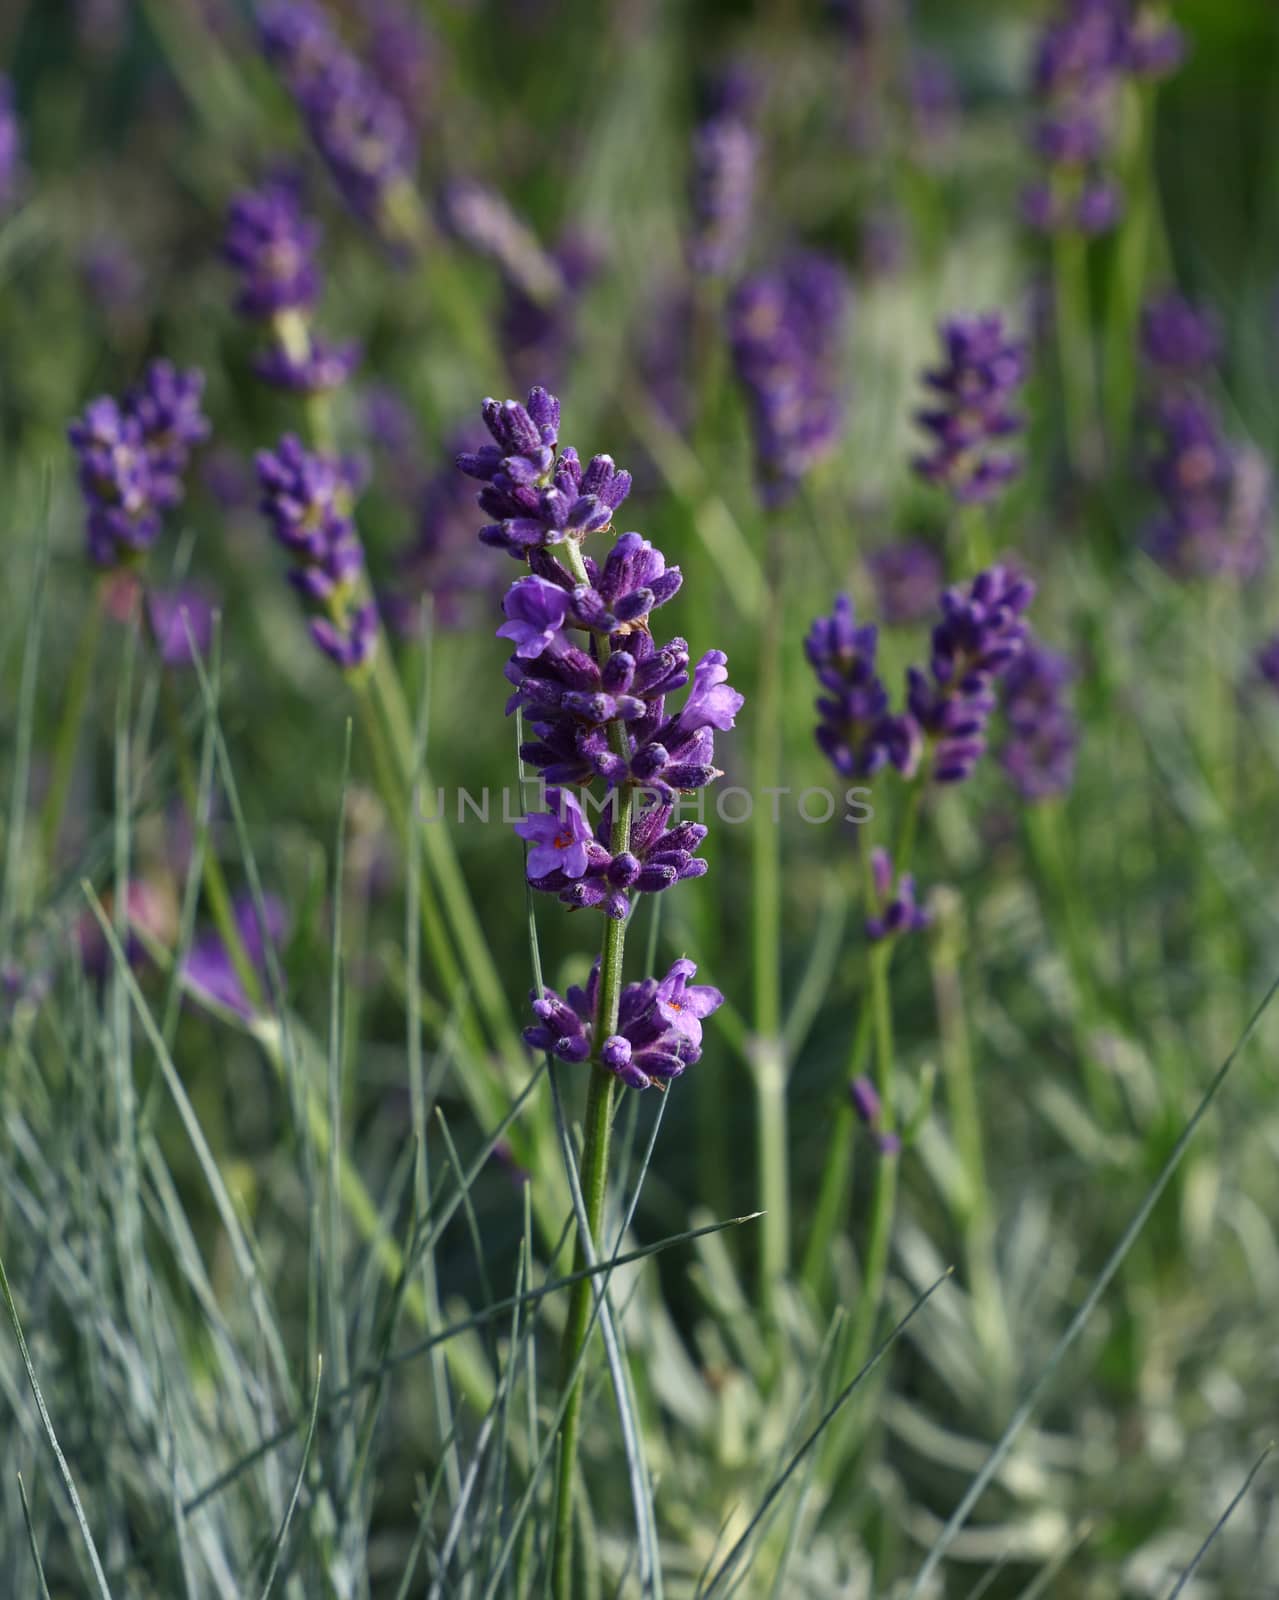 Close up purple lavender flowers in green grass by BreakingTheWalls